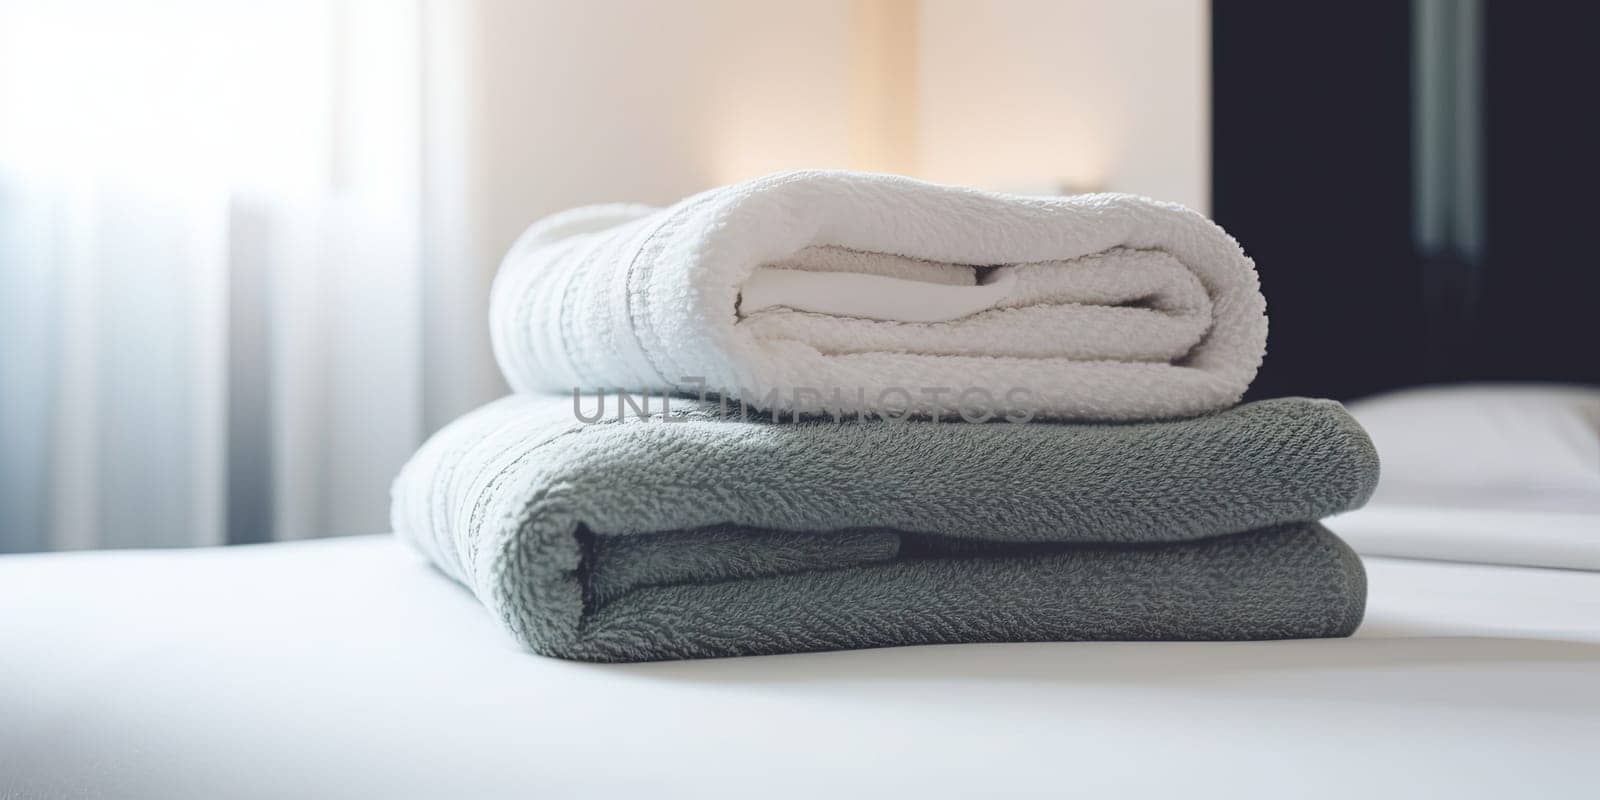 Clean, fresh towels adorn hotel room bed. by tan4ikk1